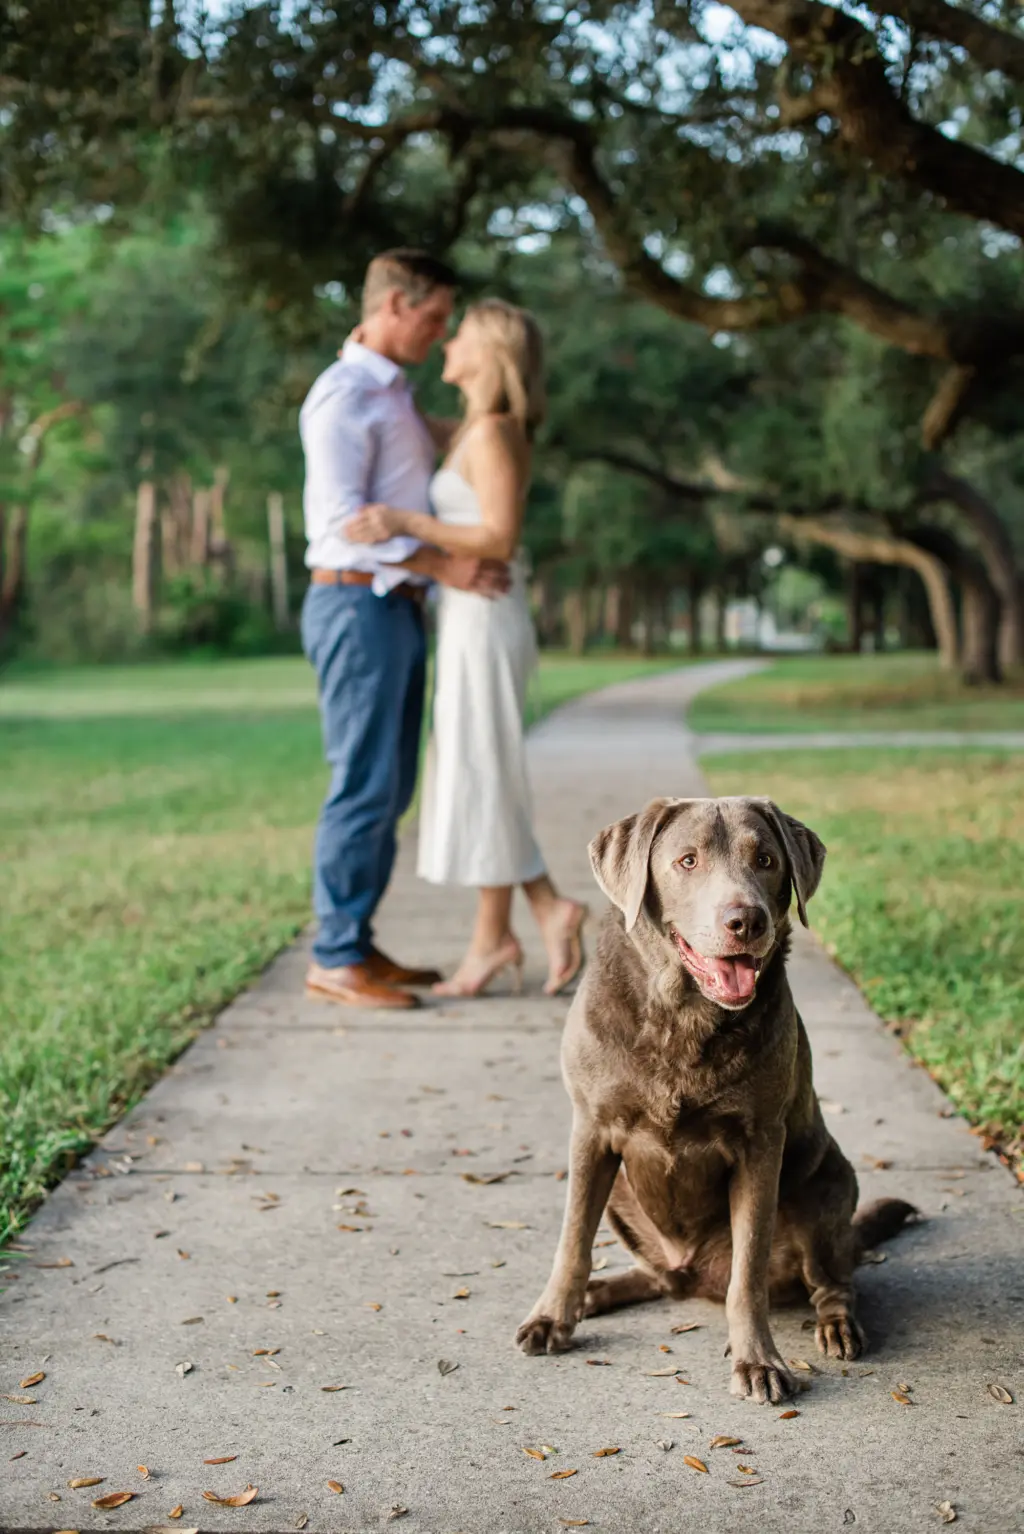 Mobbly Bayou Beach Park Engagement Shoot Location Ideas | Tampa Bay Wedding Photographer Joyelan Photography